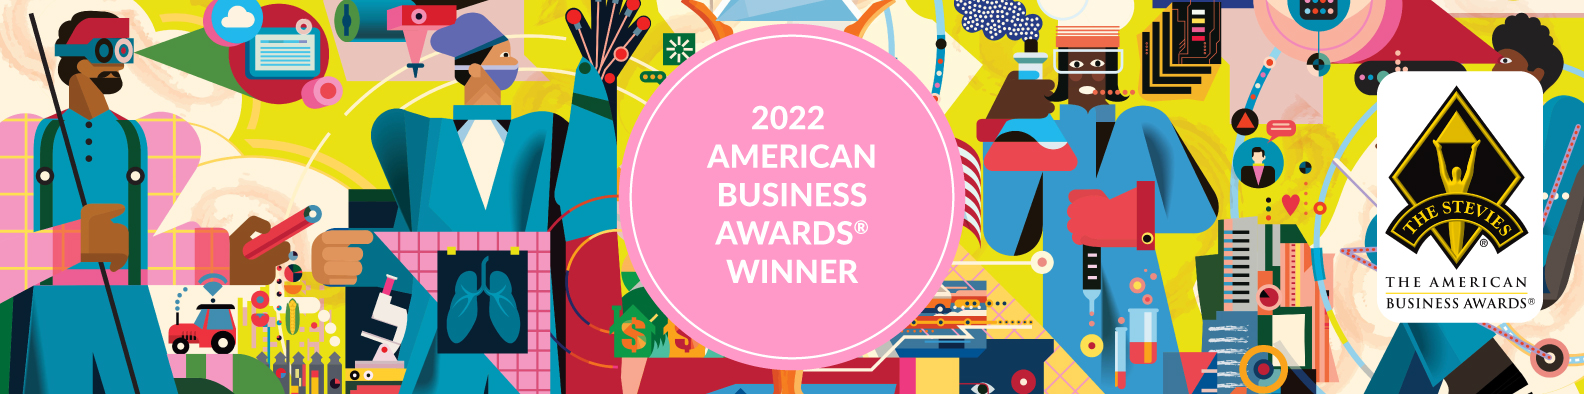 Toshiba Bronze Stevie® Award Winner in 2022 American Business Awards®